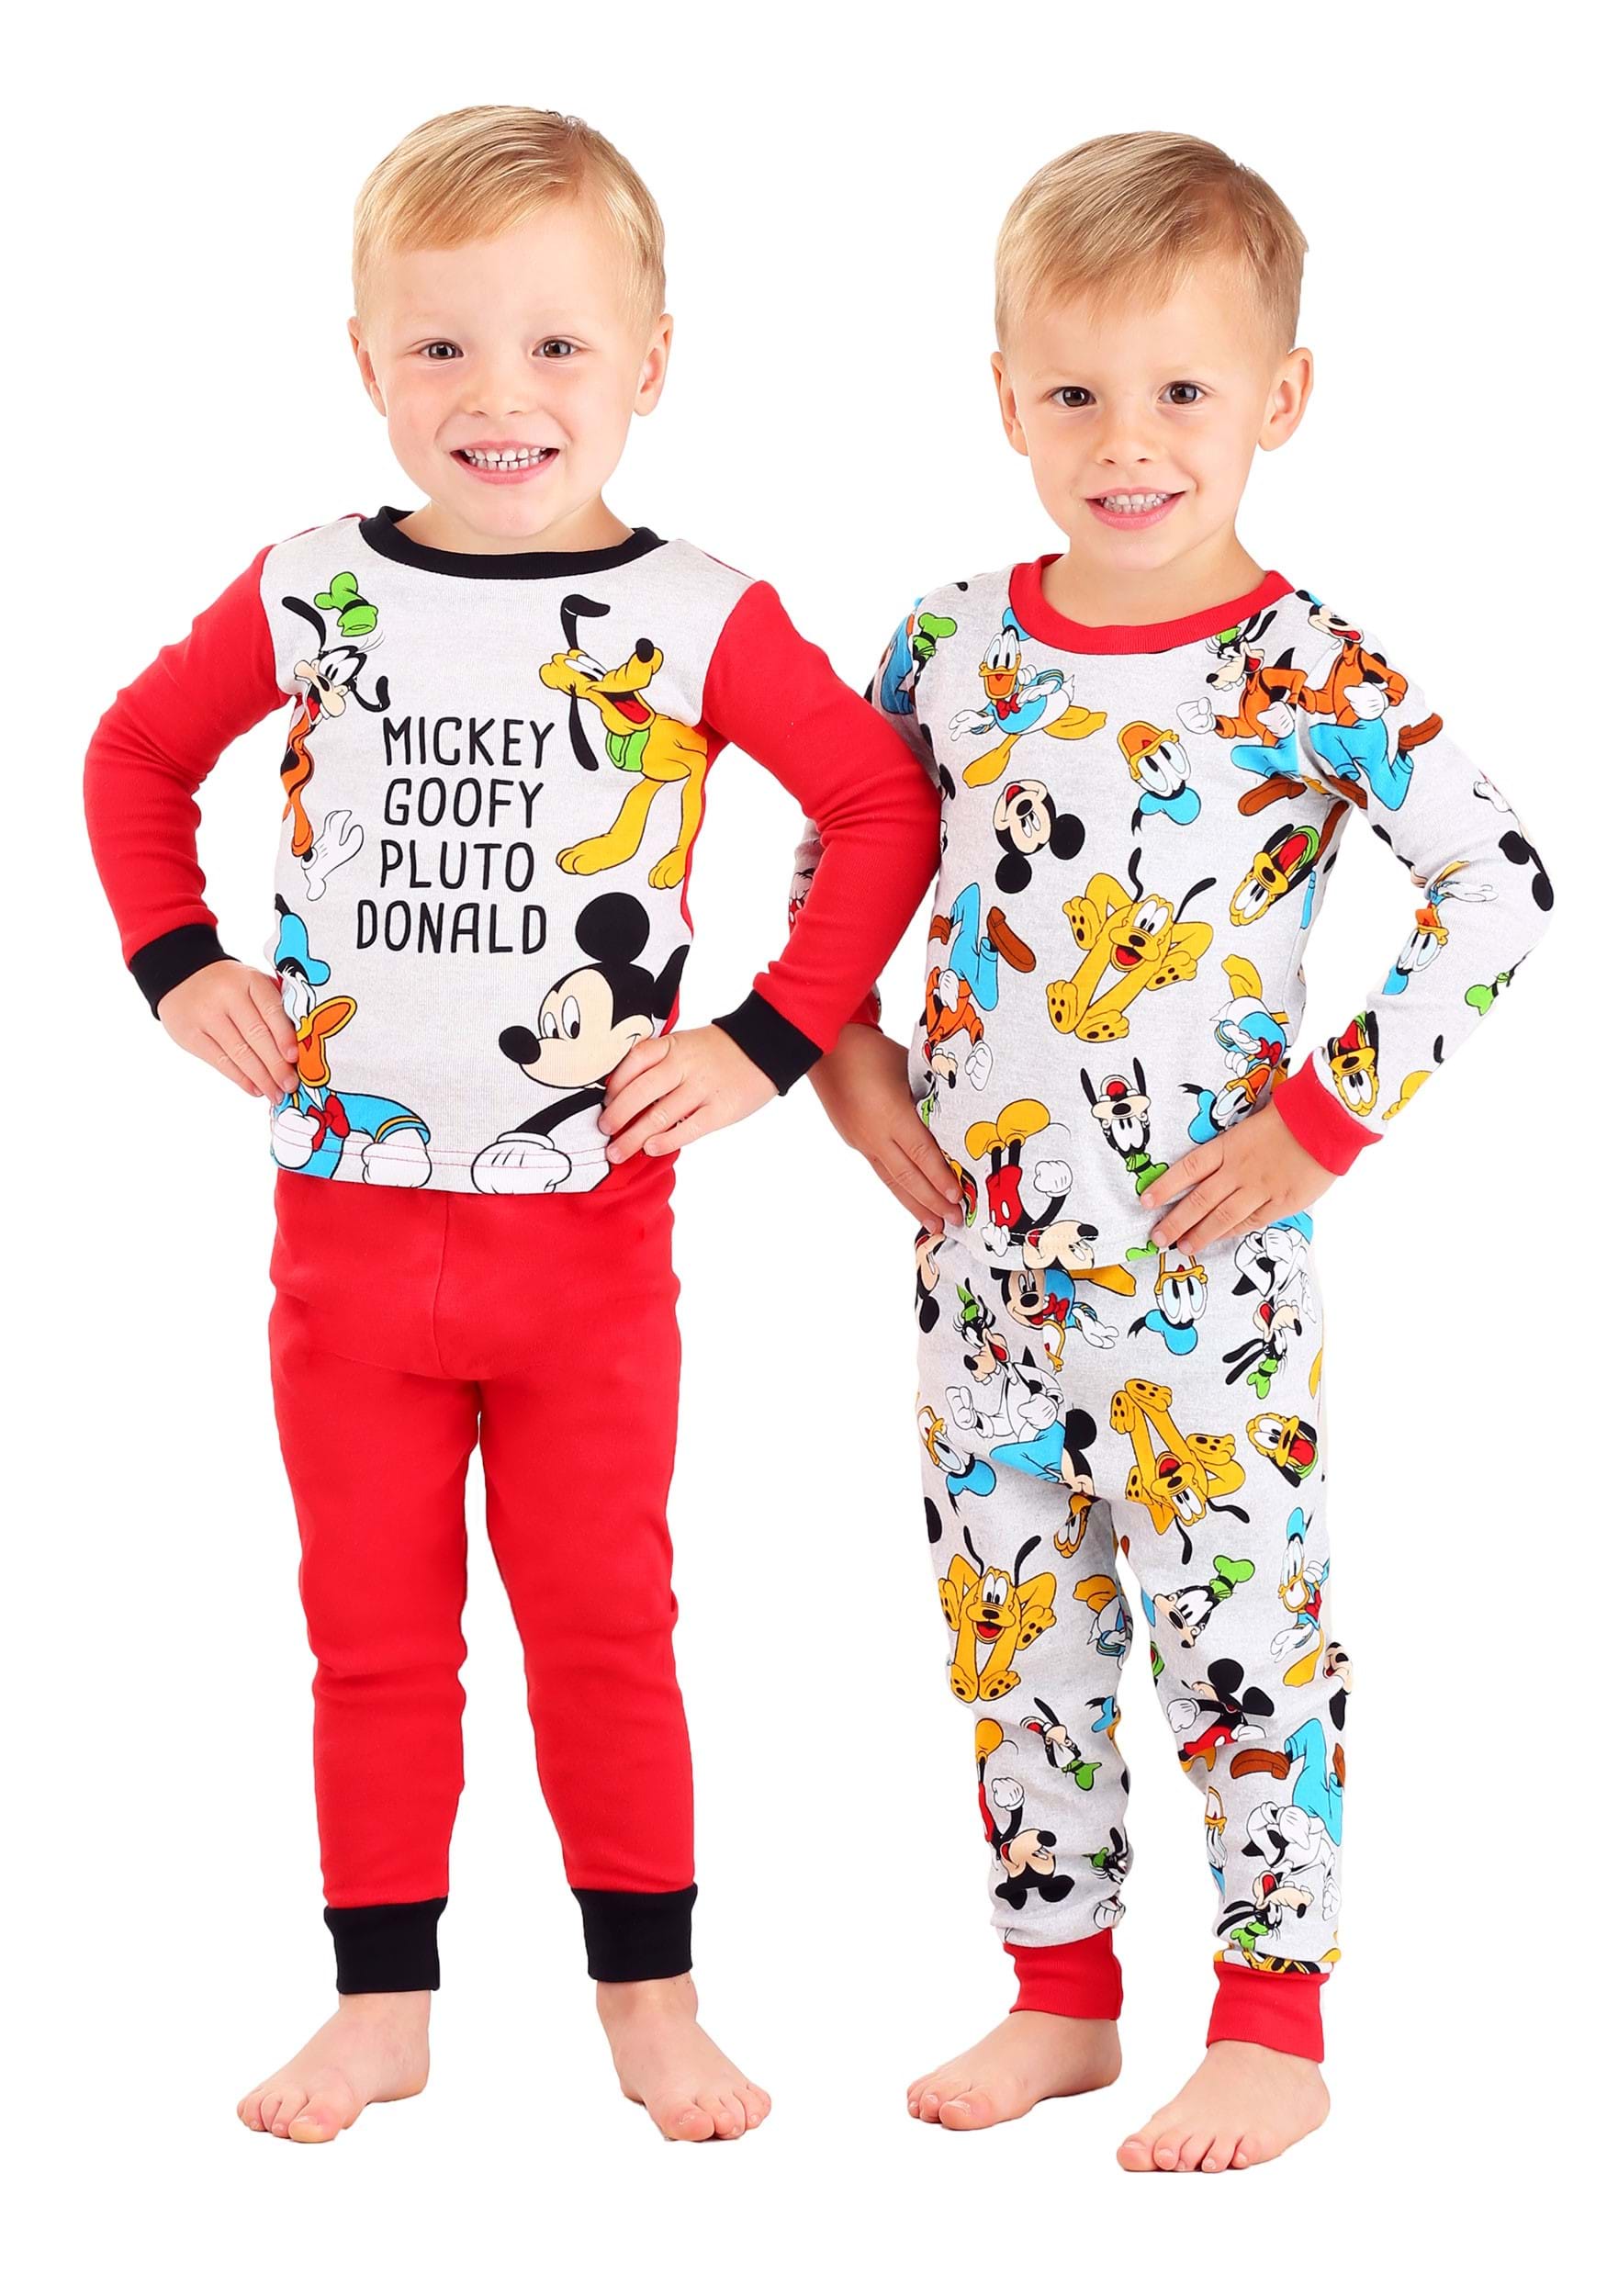 Mickey Goofy Pluto Donald 4 Piece Sleepwear for Toddlers